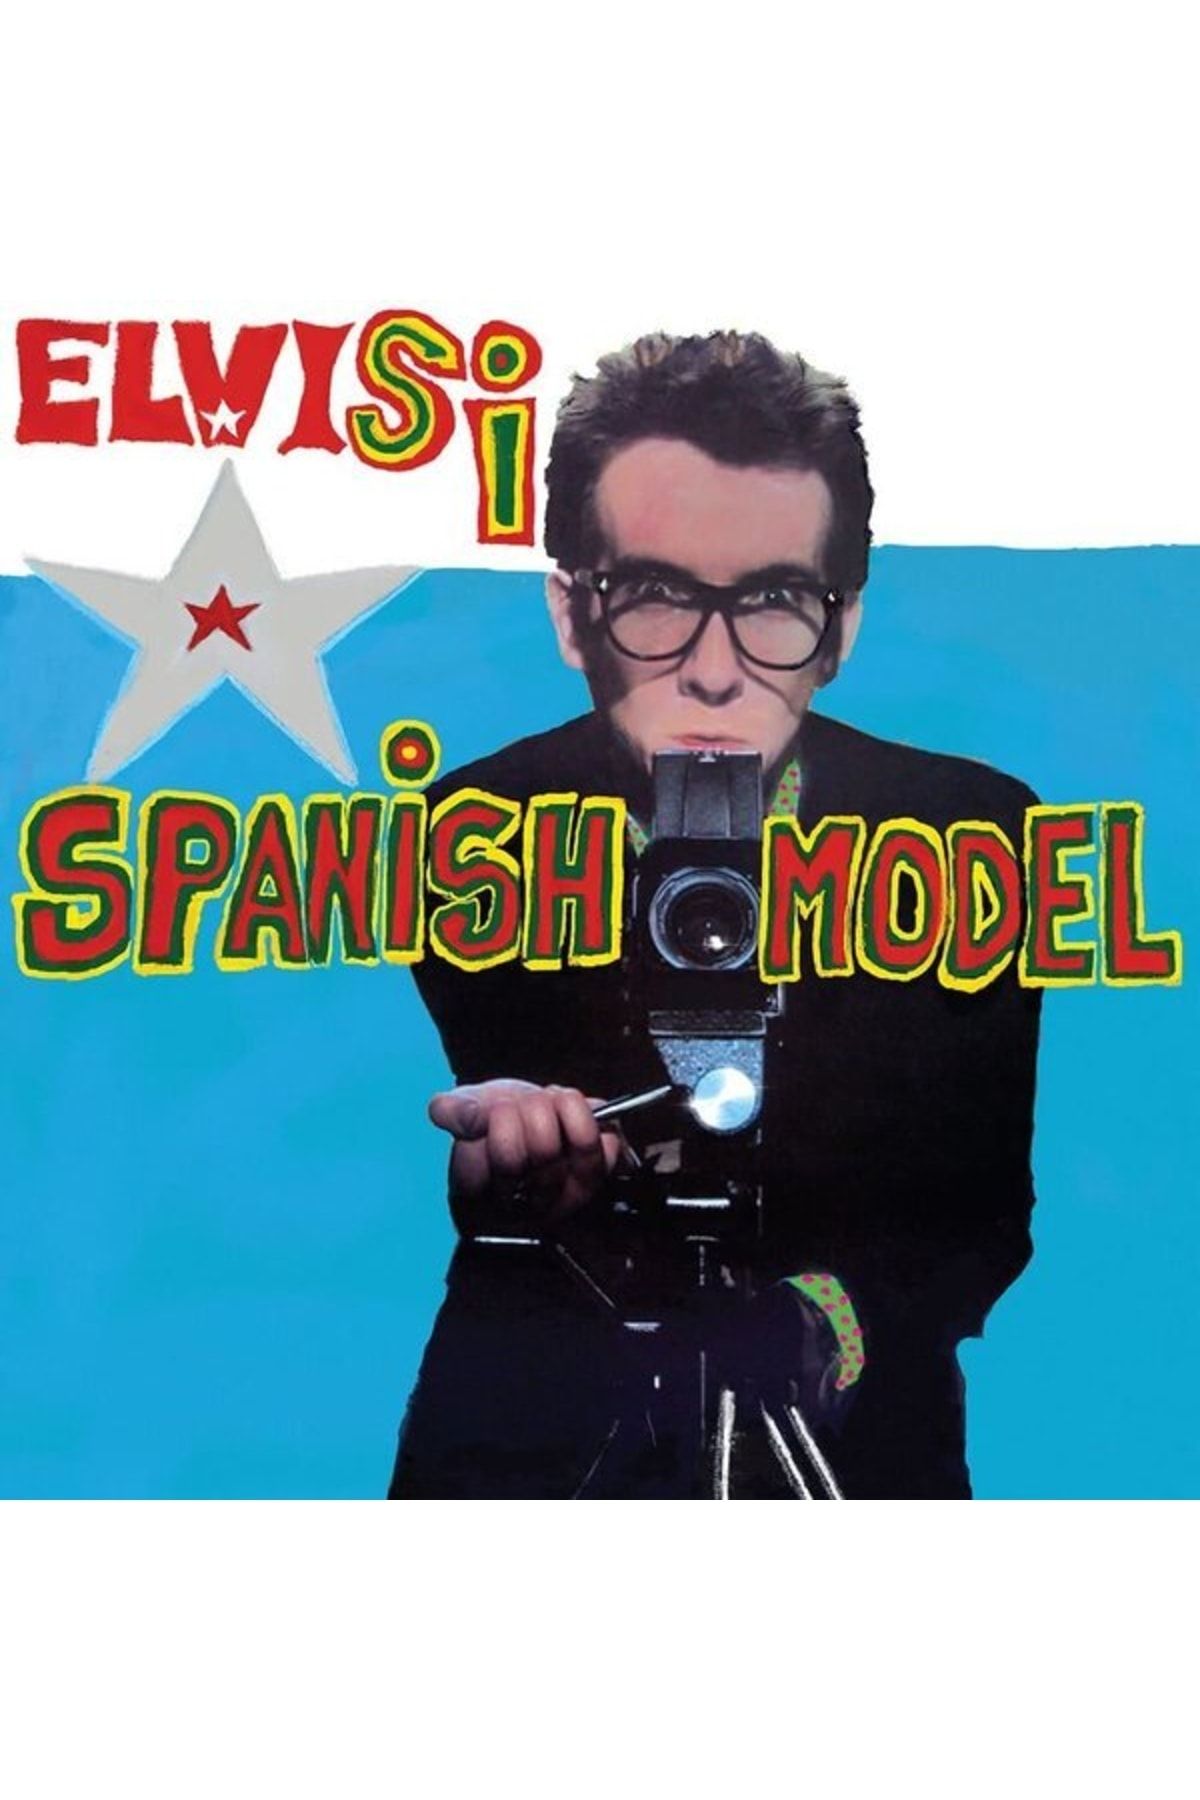 Universal Spanish Model